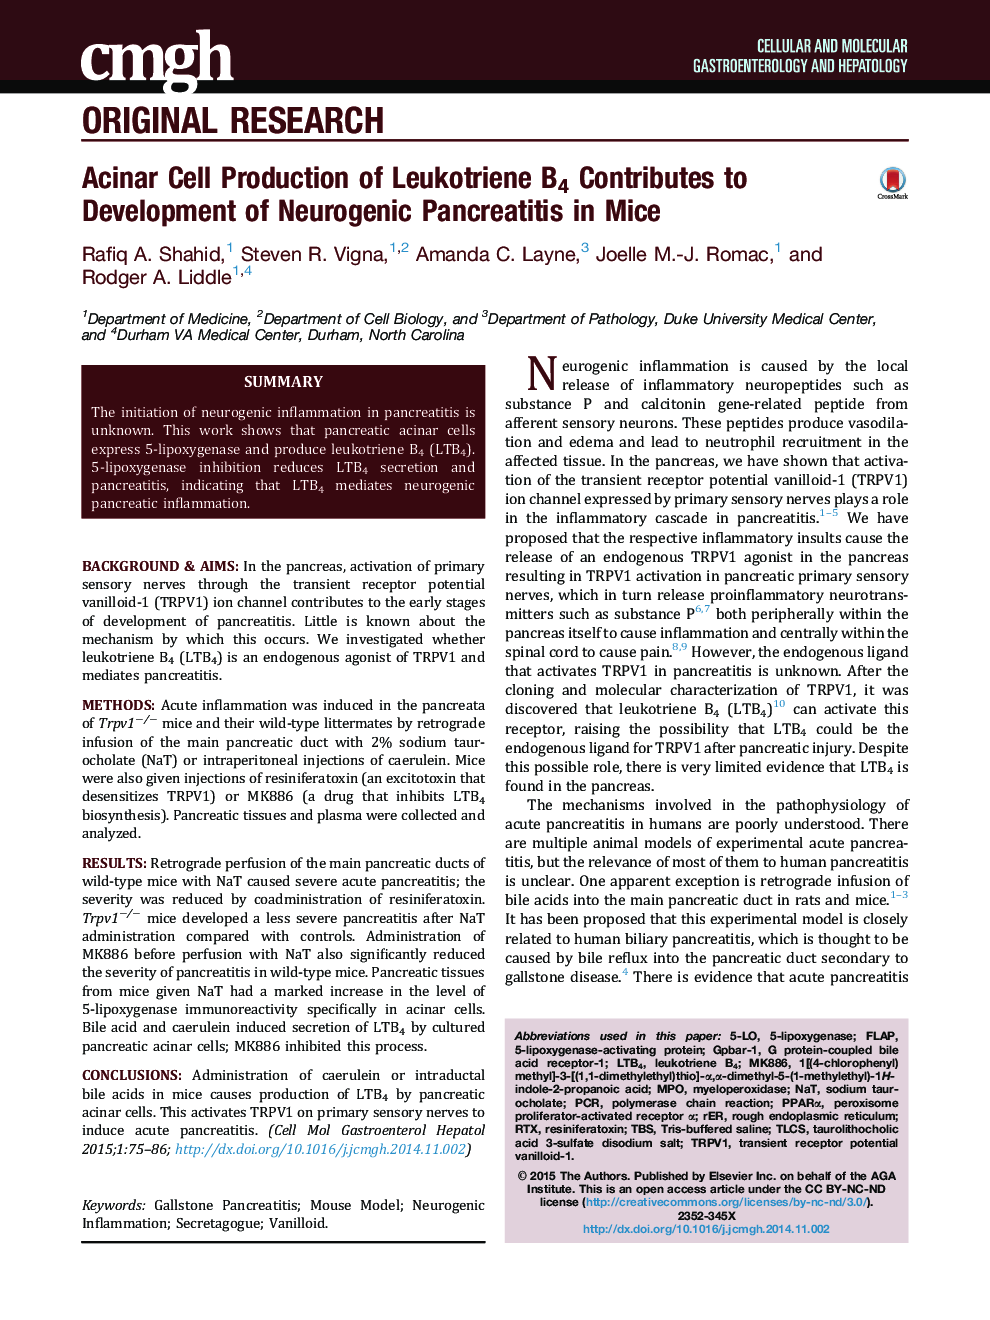 Acinar Cell Production of Leukotriene B4 Contributes to Development of Neurogenic Pancreatitis in Mice 